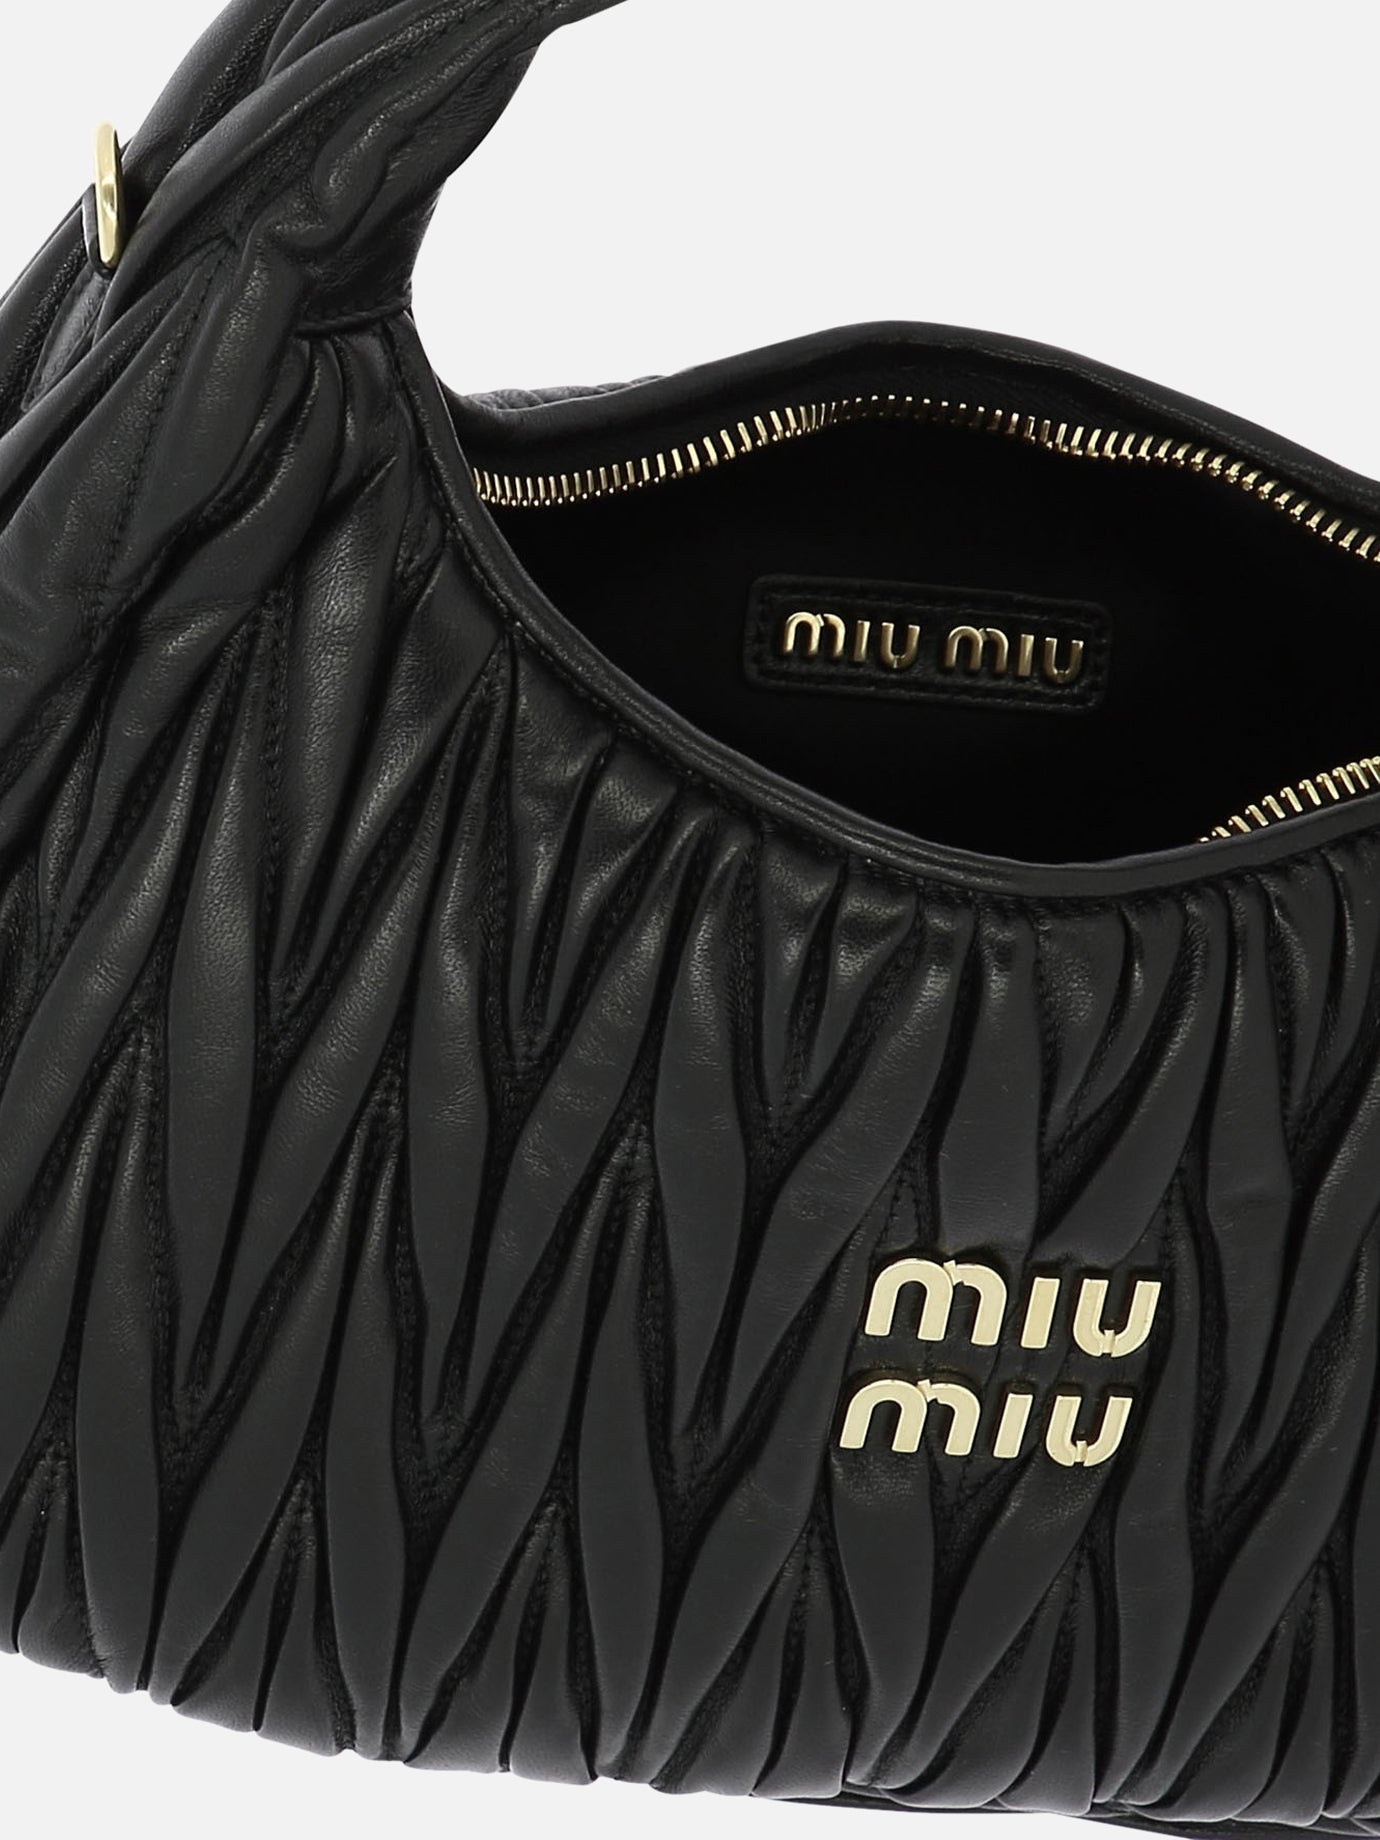 Miu Wander Leather Shoulder Bag in Black - Miu Miu